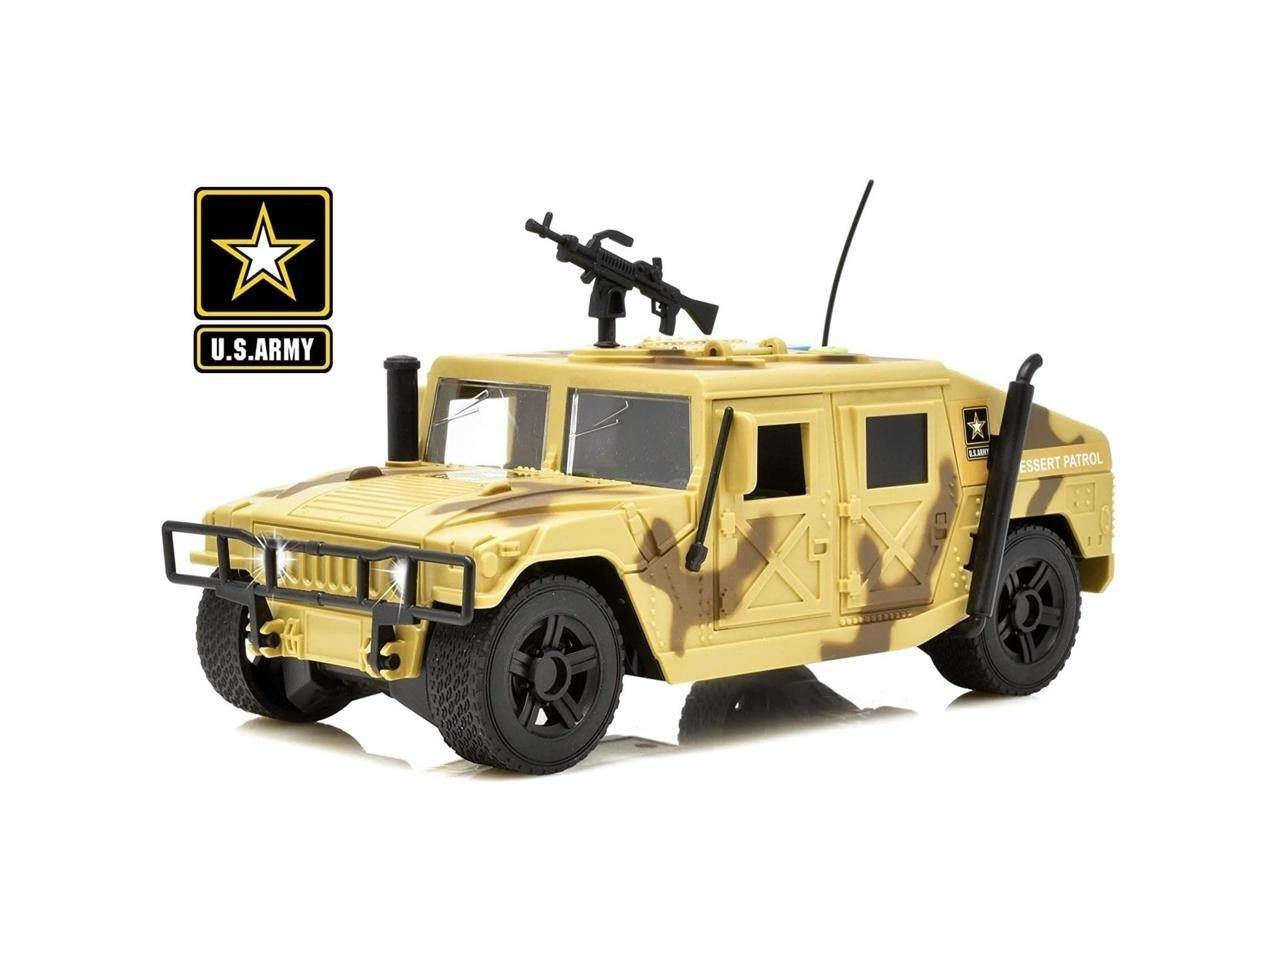 United States Army Desert Patrol Vehicle